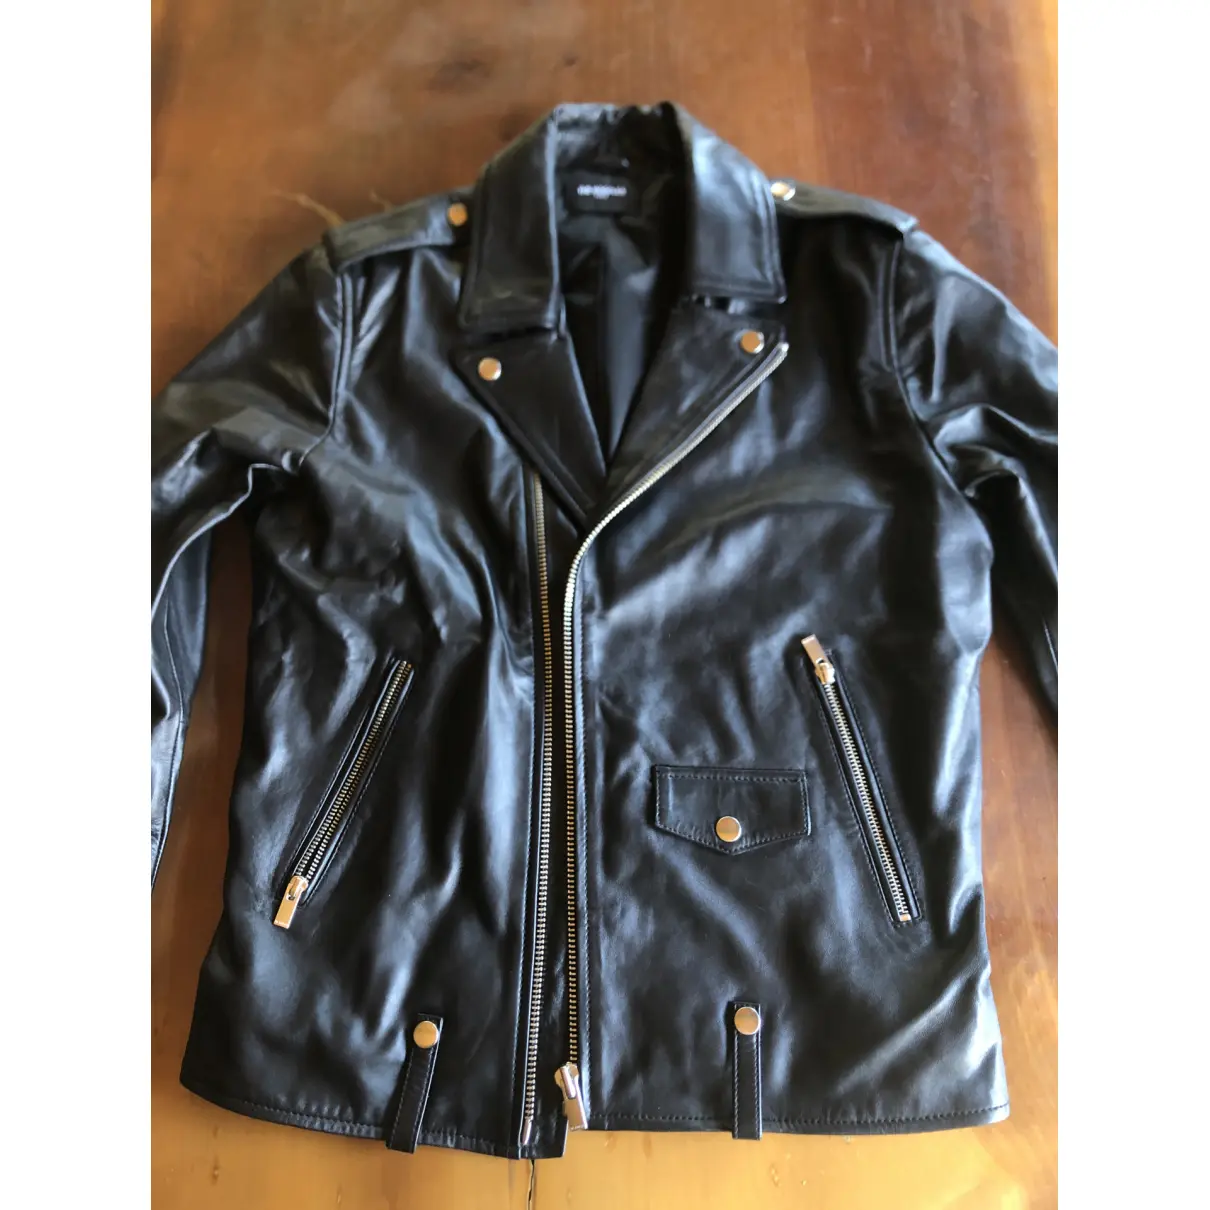 Buy The Kooples Leather vest online